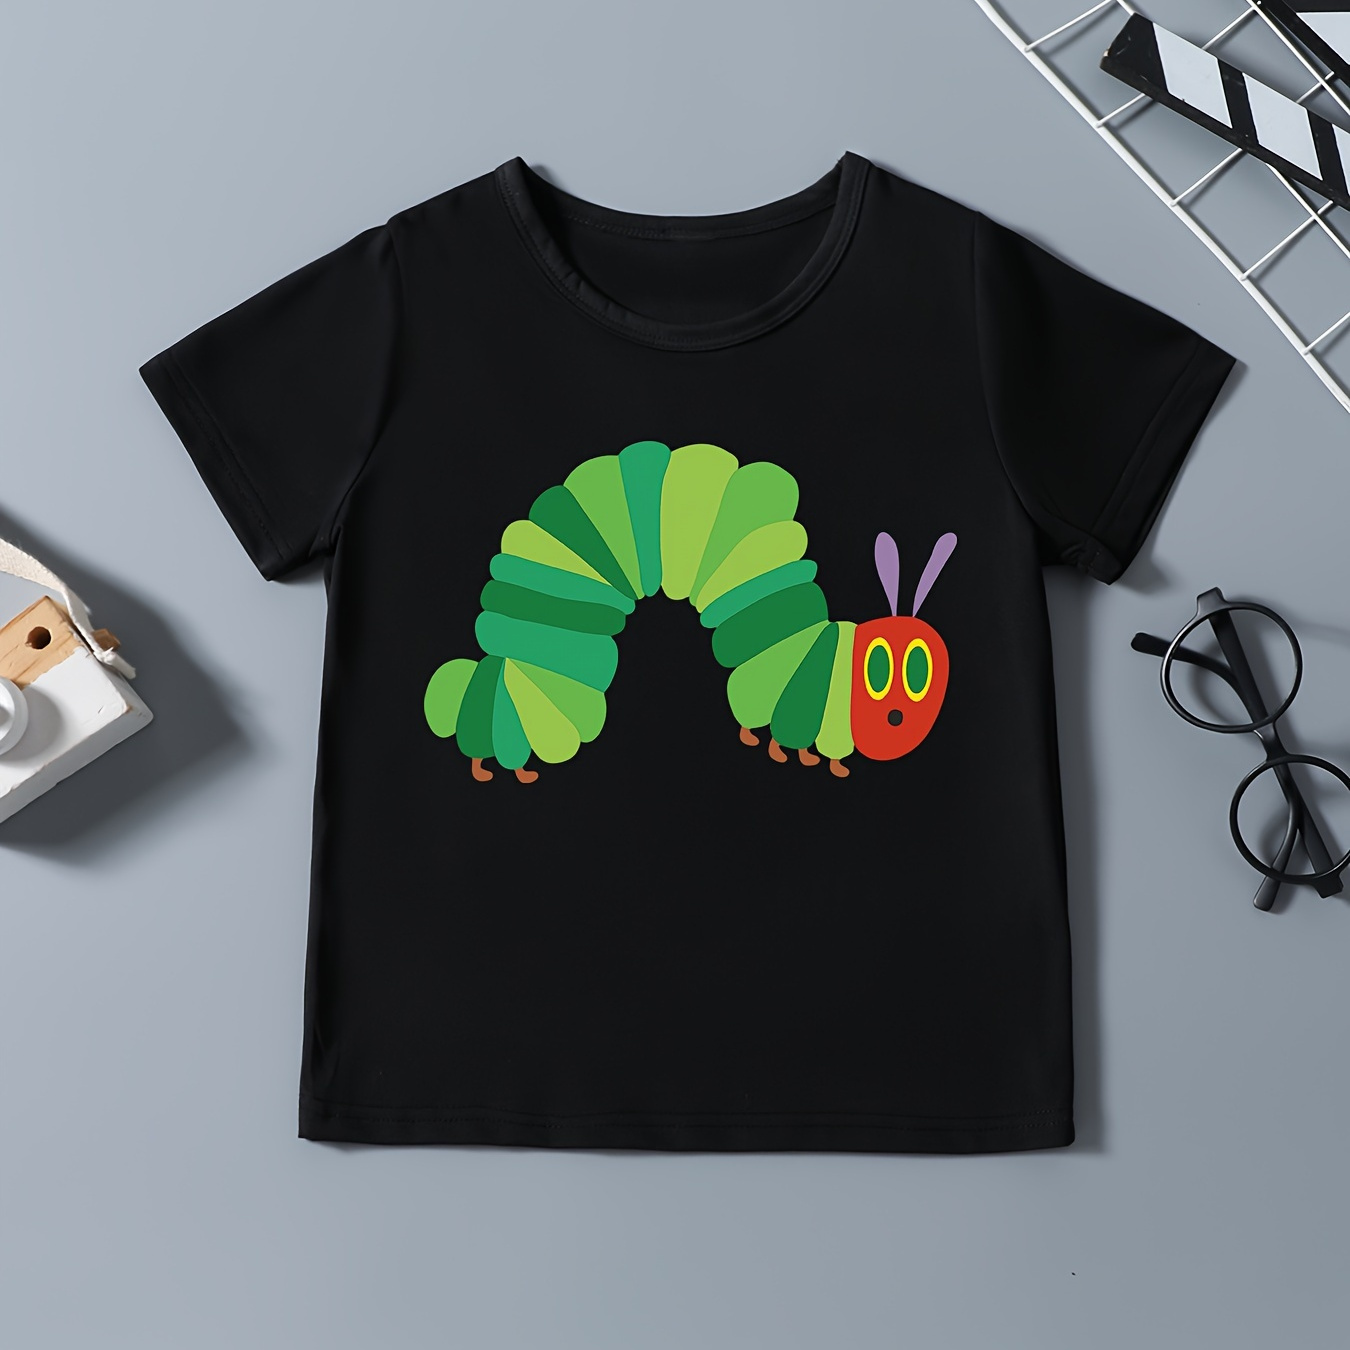 

Toddler Girls Boys Cartoon Caterpillar Print T-shirt, Casual Short Sleeve Top, Baby Clothing For Summer